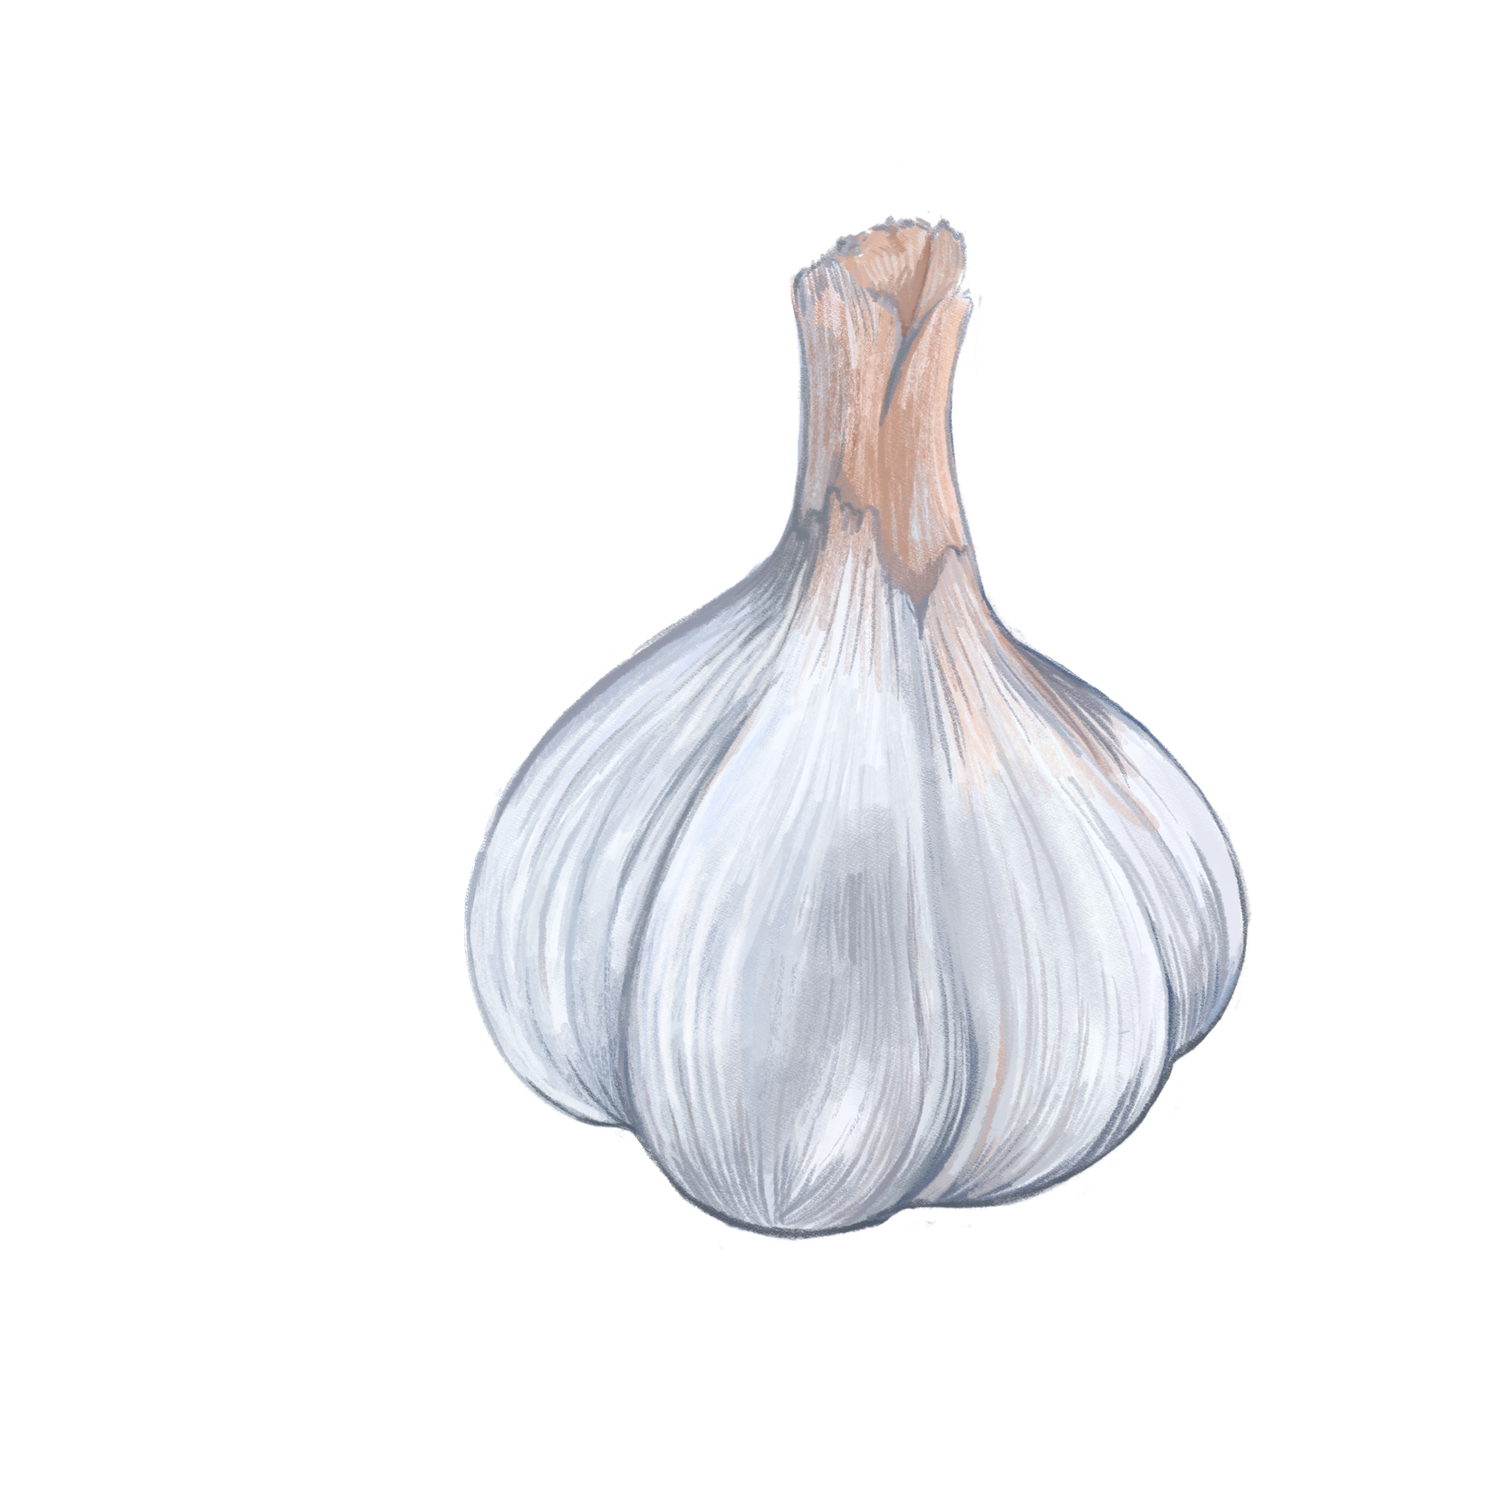 a graphic of a garlic bulb